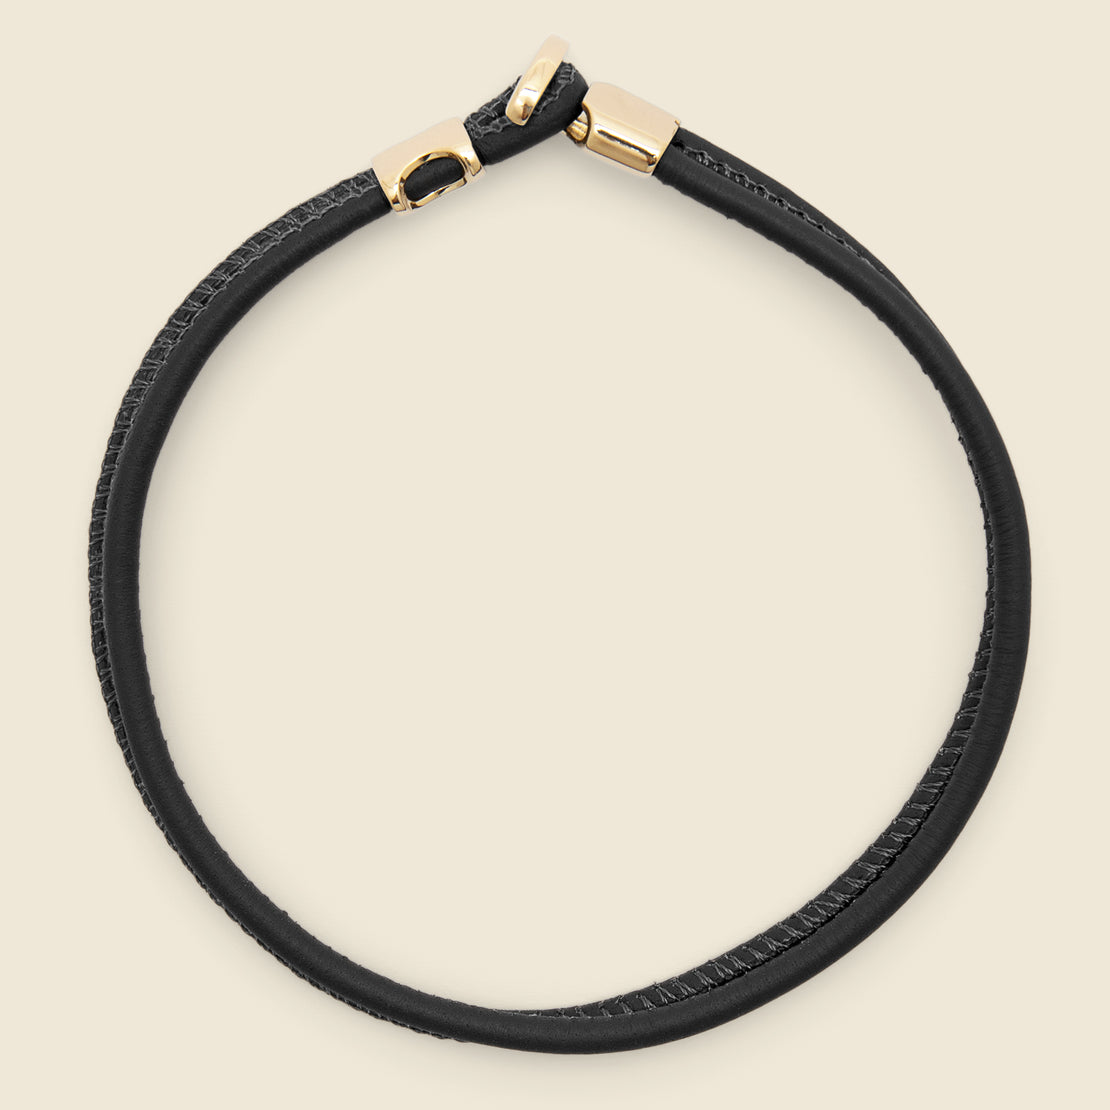 Orson Loop Leather Bracelet - Gold Vermeil/Black - Miansai - STAG Provisions - Accessories - Cuffs